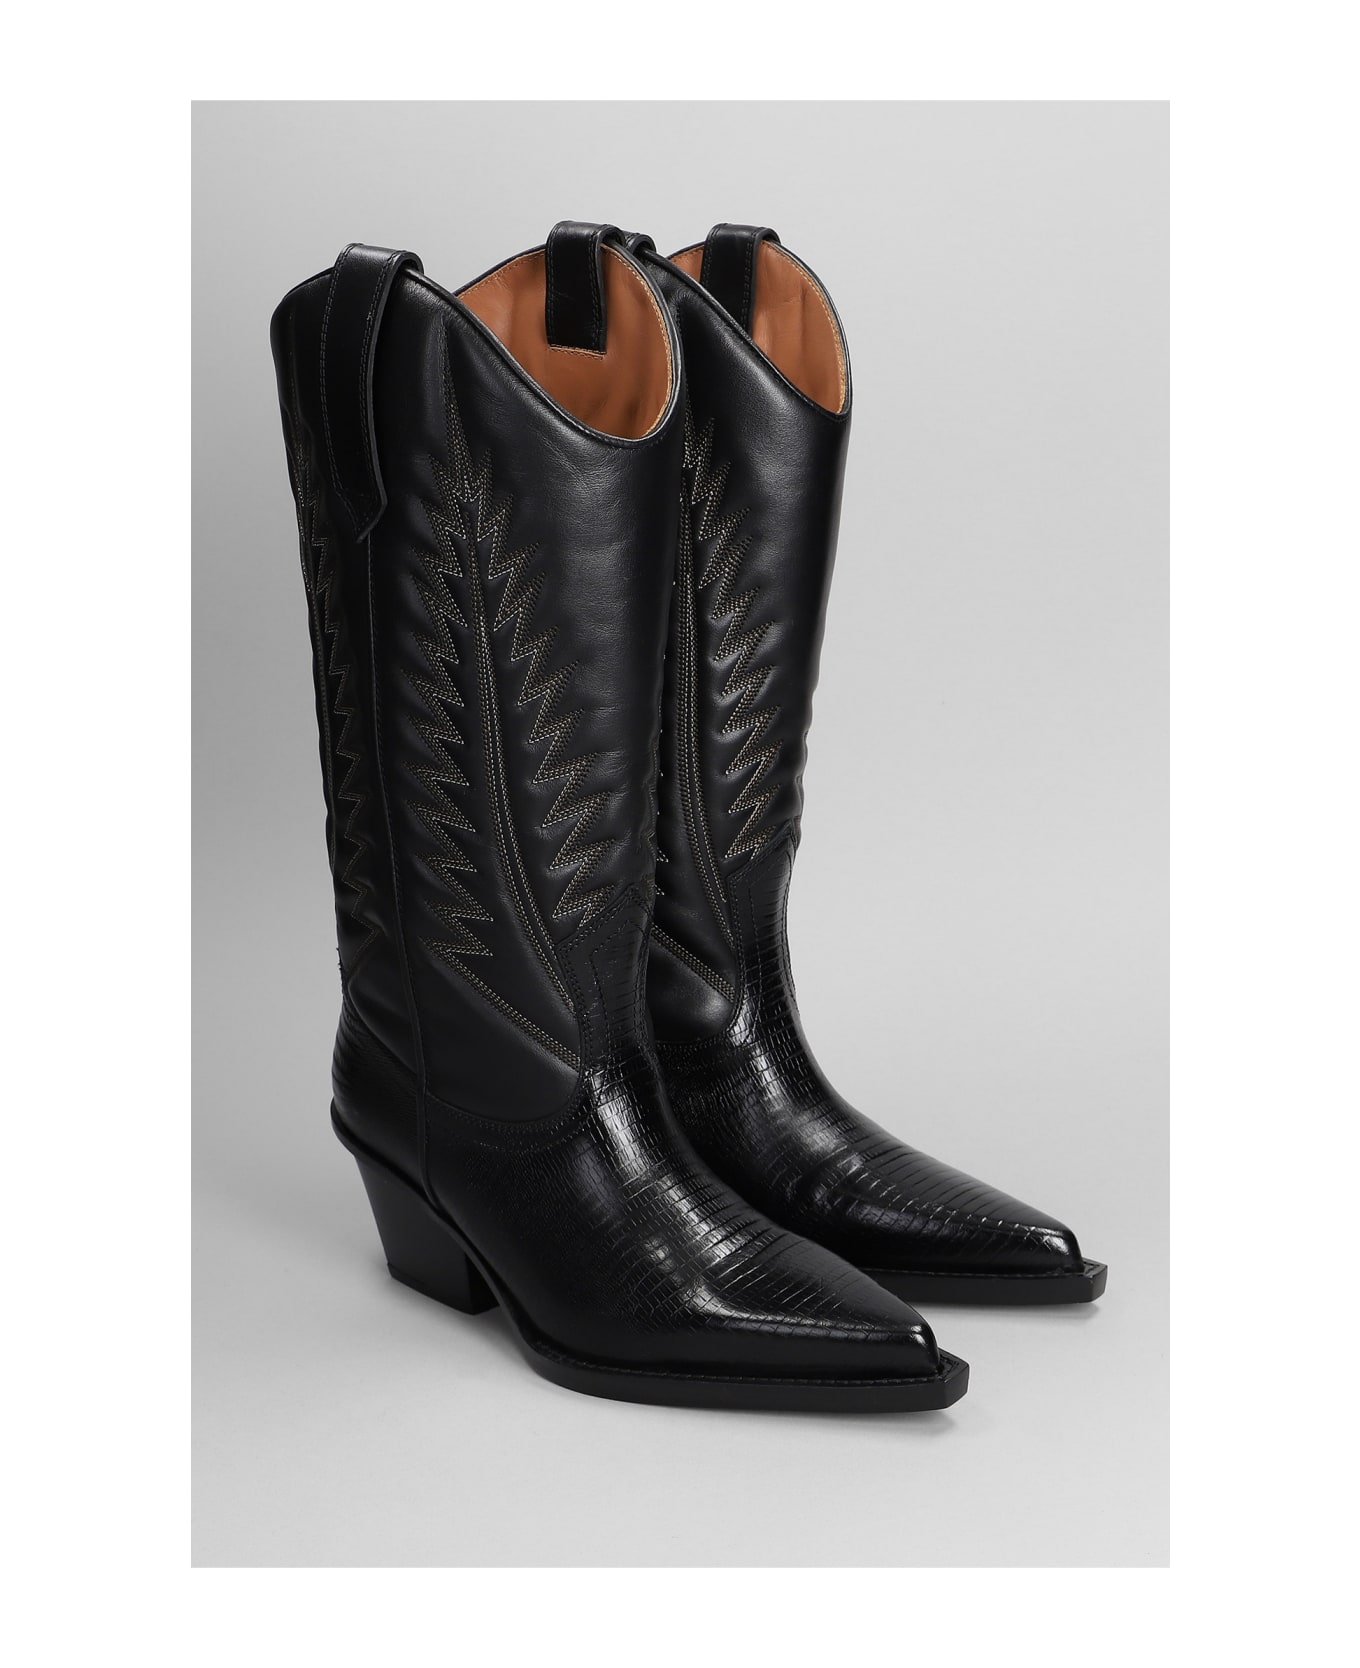 Paris Texas Texan Boots In Black Leather - black